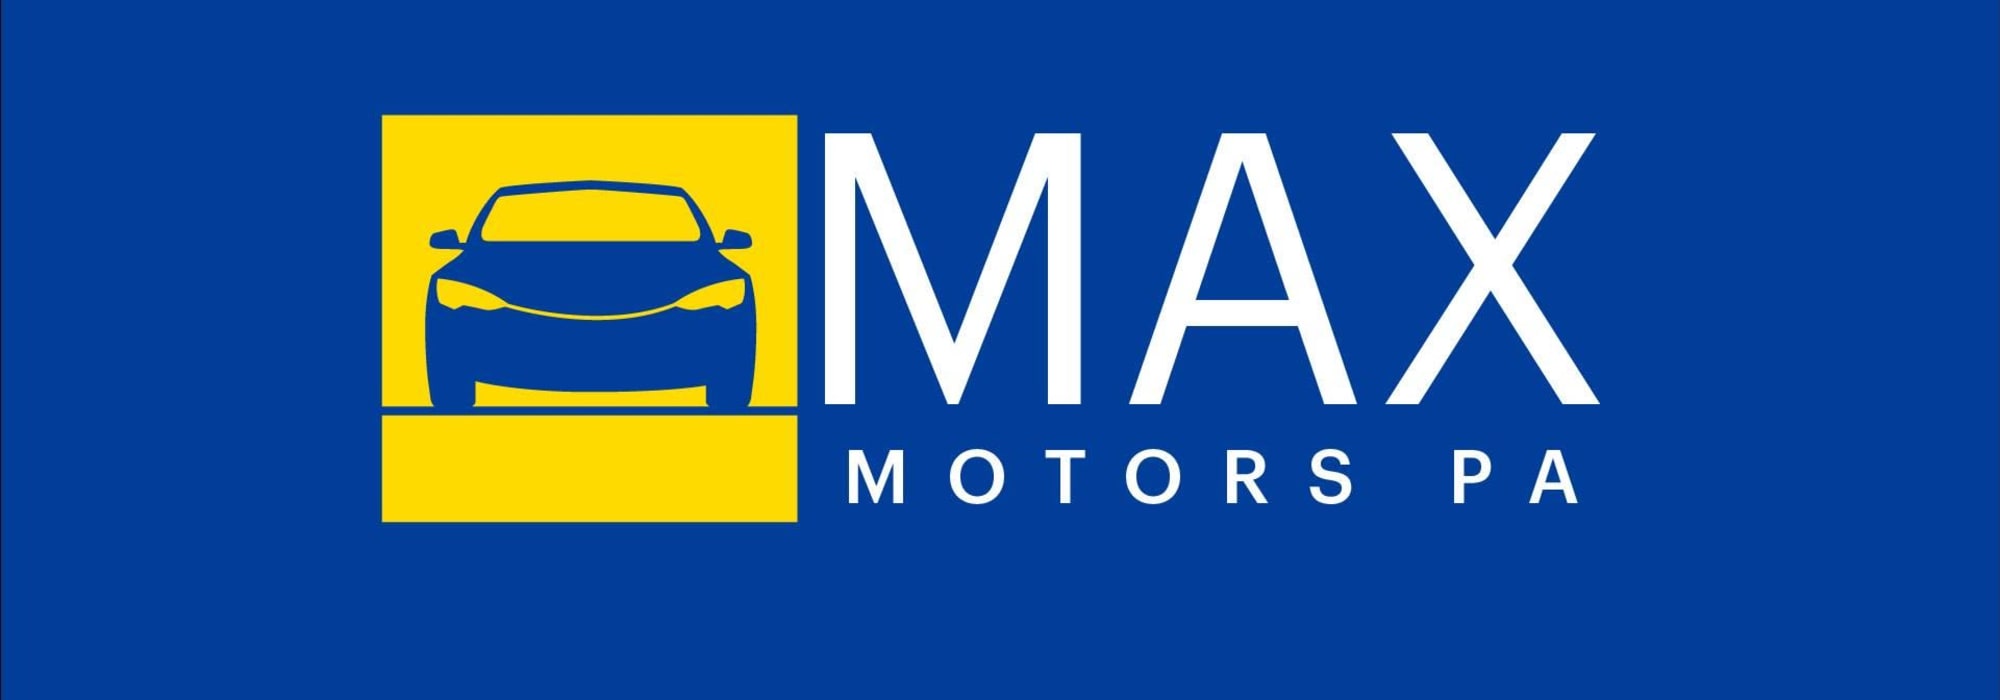 Max Motors Panama